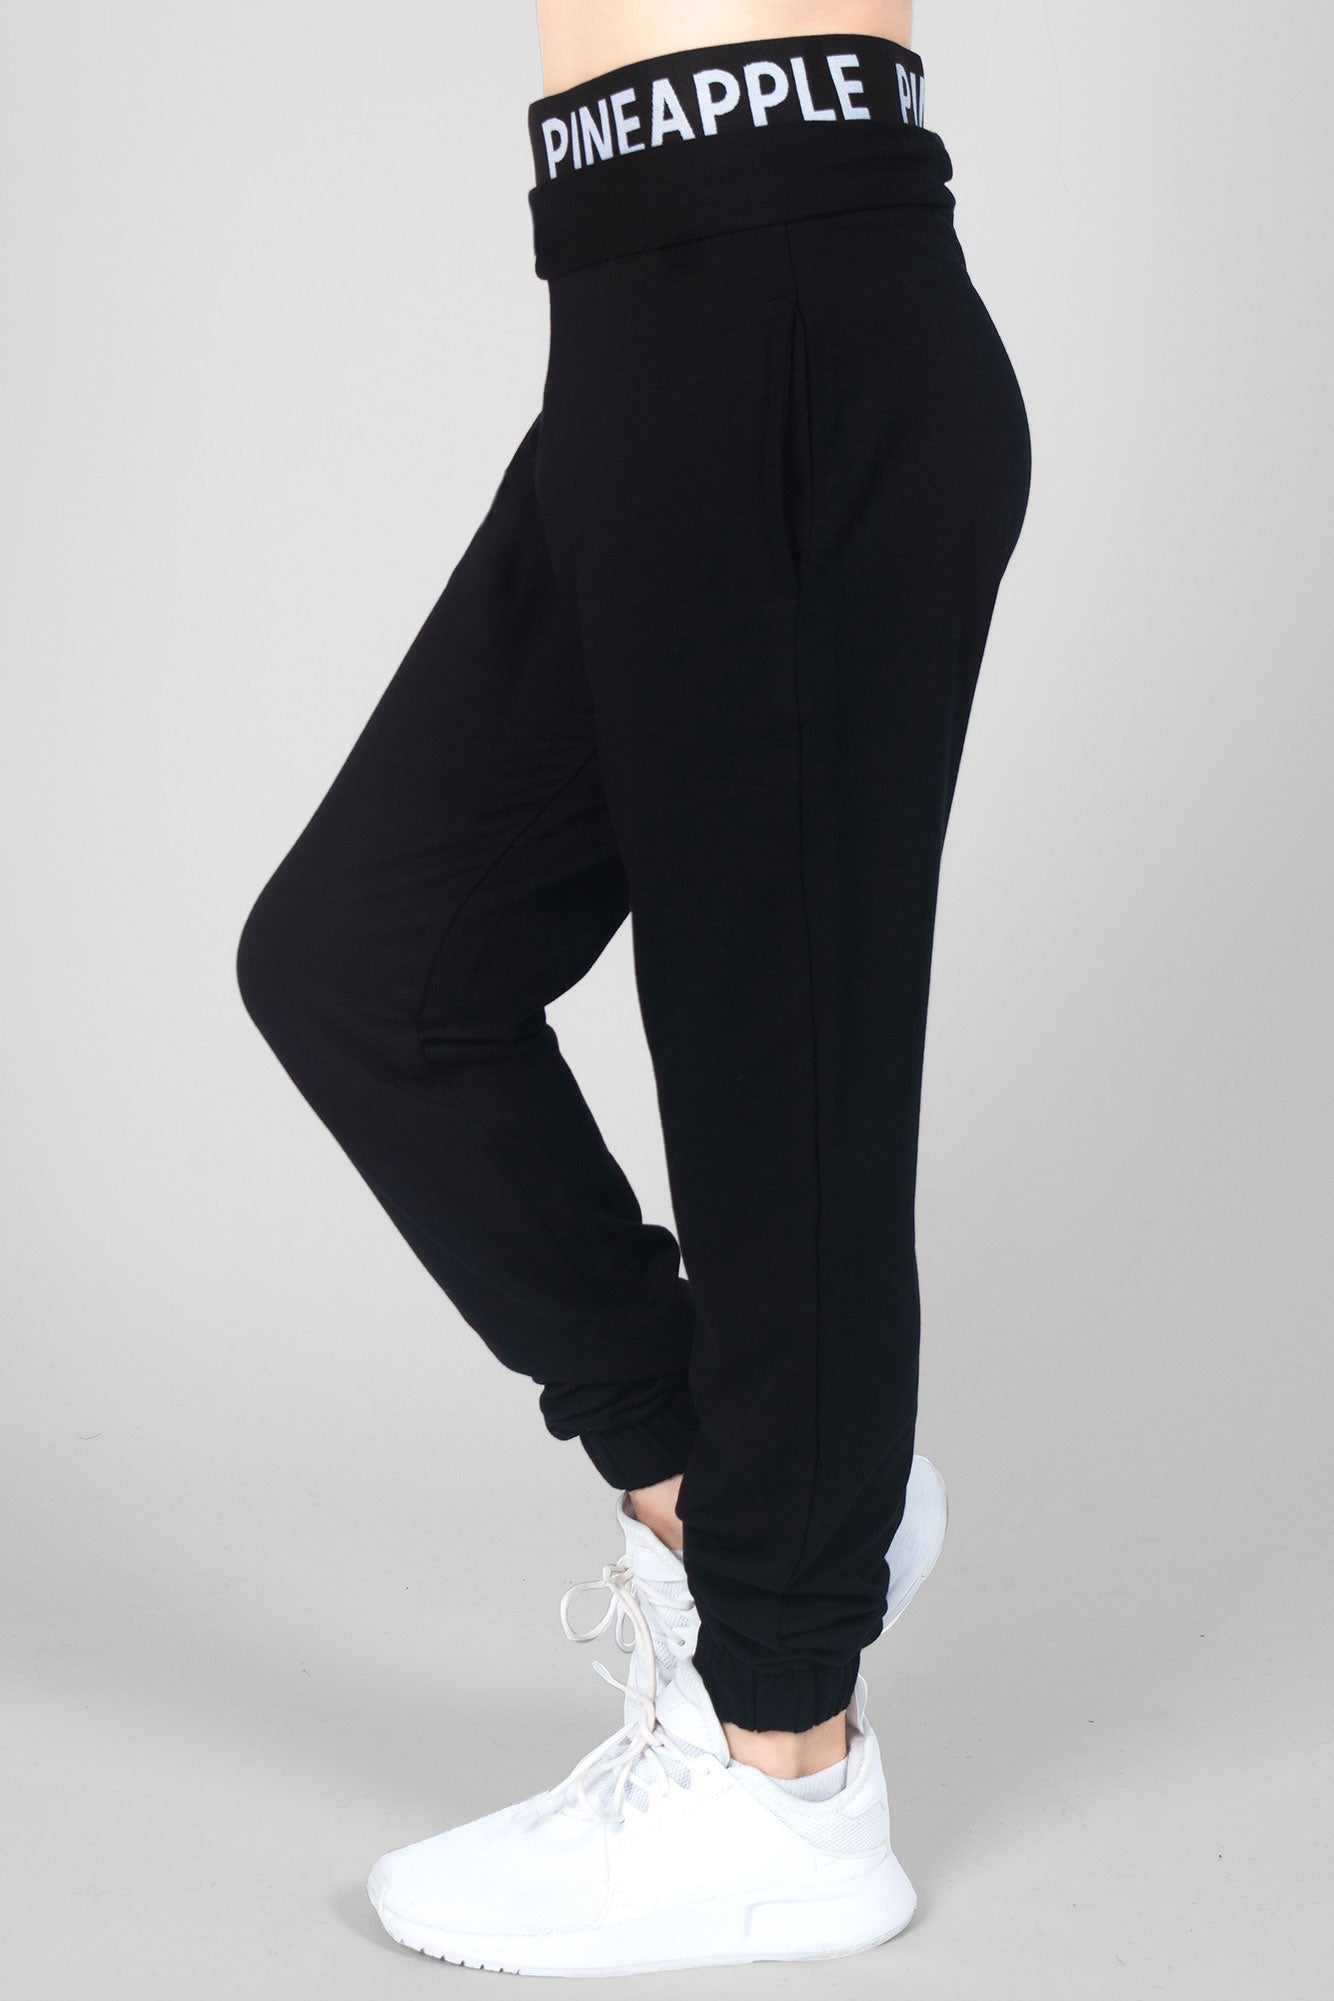 Adidas Straight Pants Women's Sports Classic 100% Cotton Bottoms Ivory  HL6561 | eBay